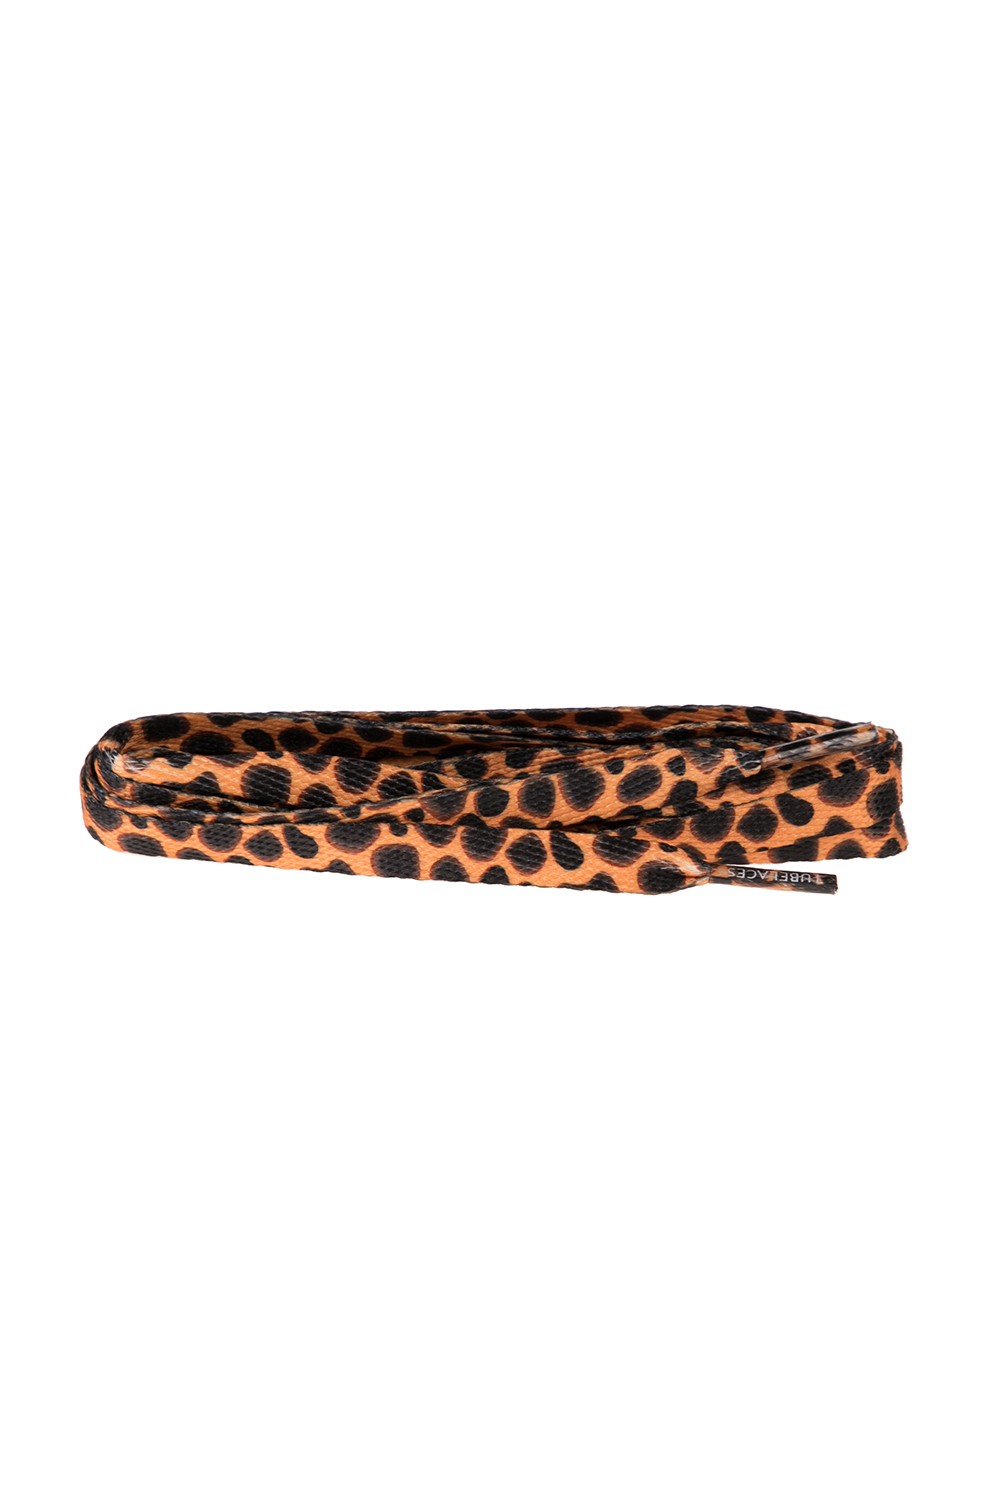 TUBELACES – Κορδόνια παπούτσιών TUBELACES SPECIAL FLAT καφέ leopard 1670418.0-M3K5